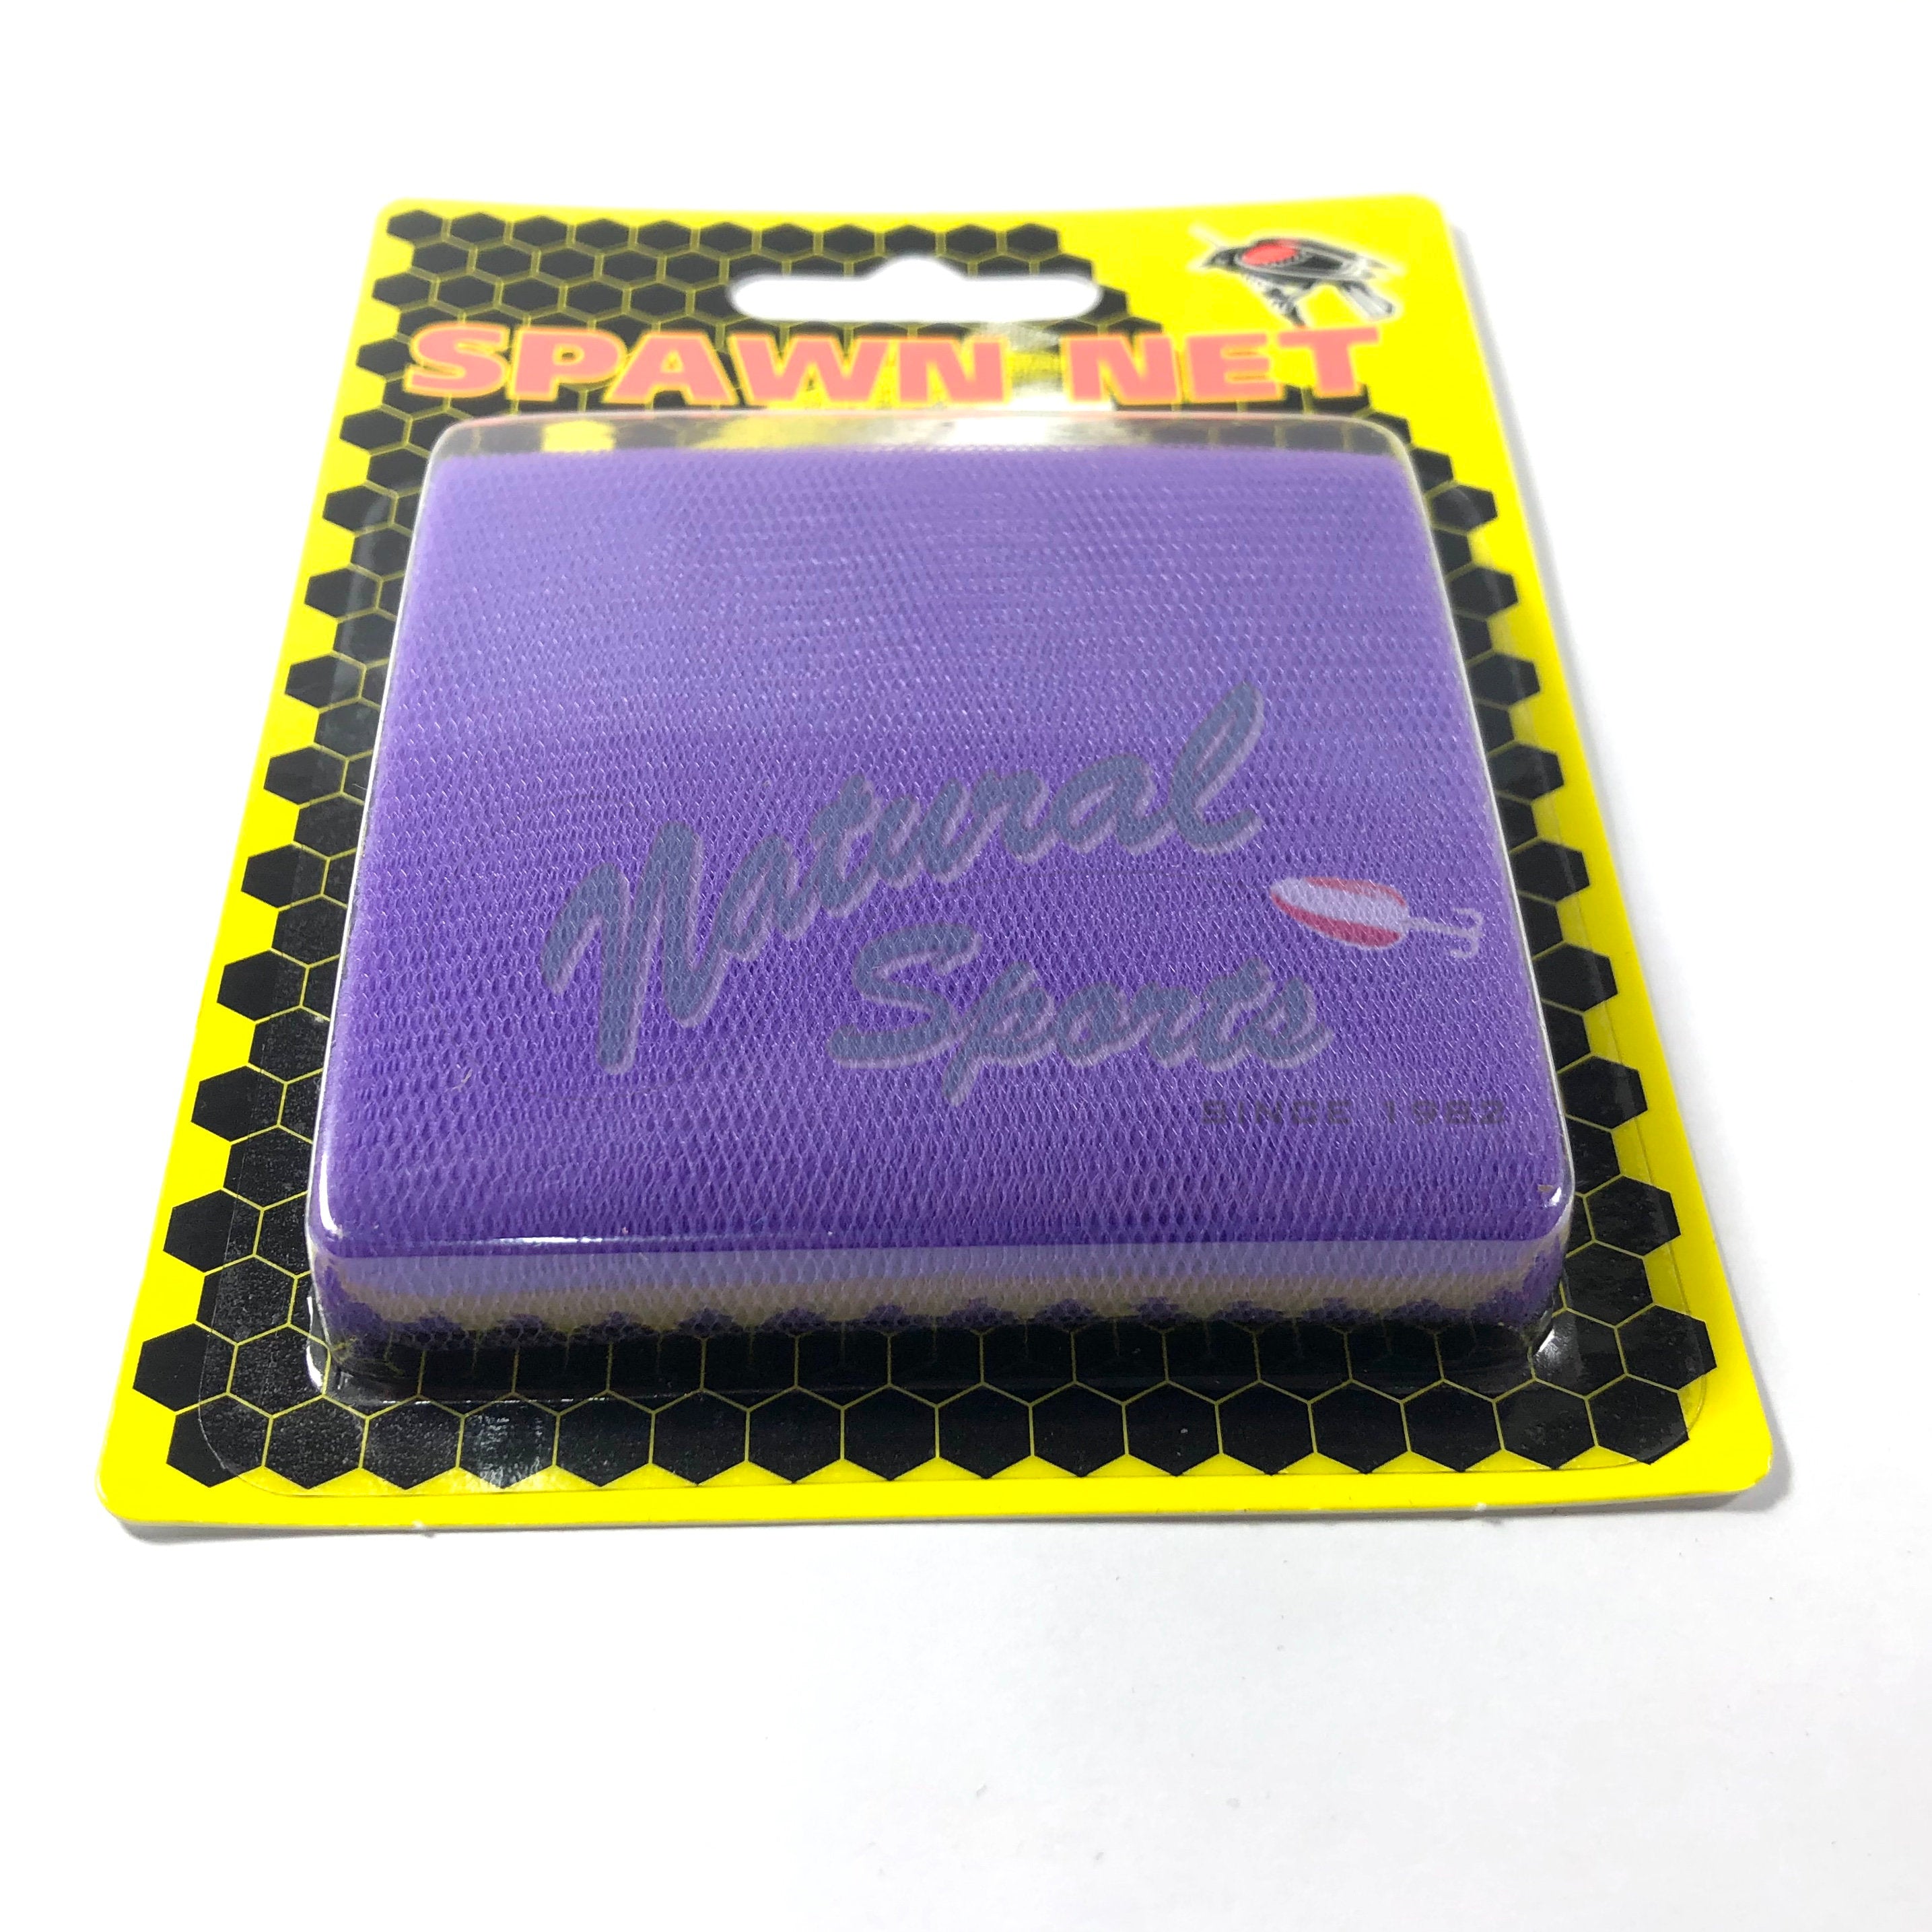 Daniel's Spawn Sac Netting - 3 x 3 Squares Packs of 50 (Purple)